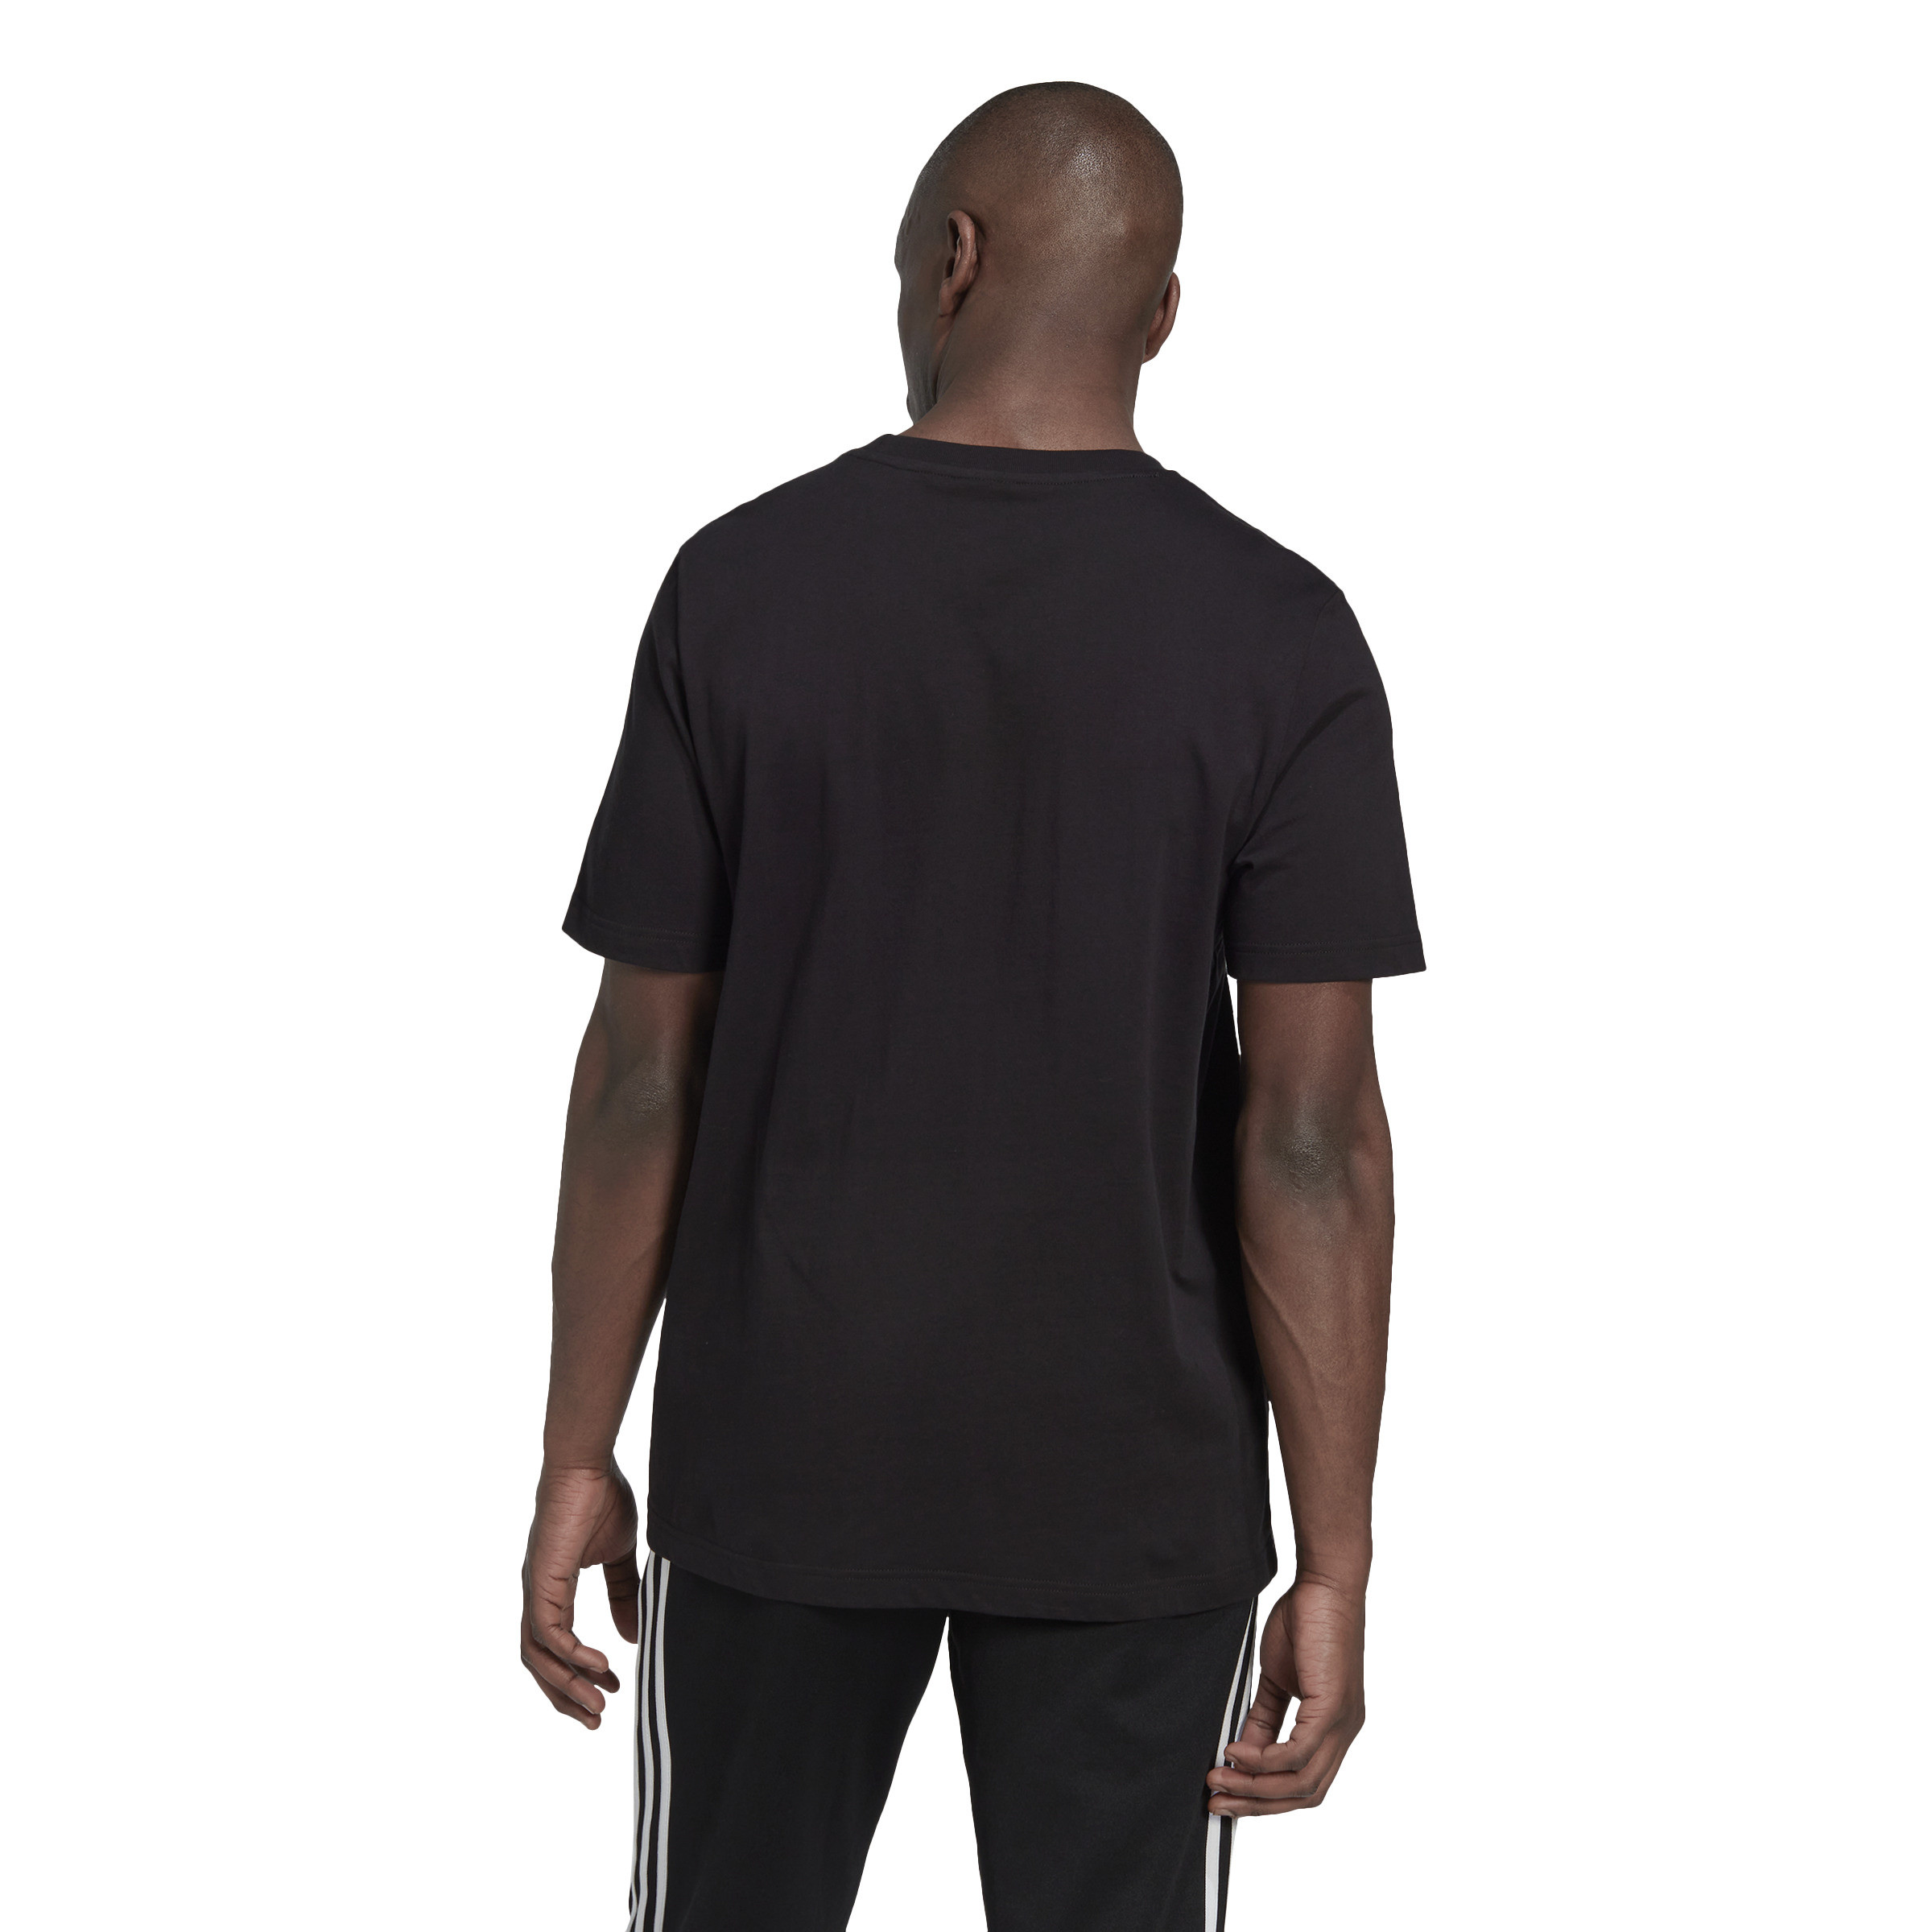 Adidas - Graphic Camo T-shirt, Black, large image number 6